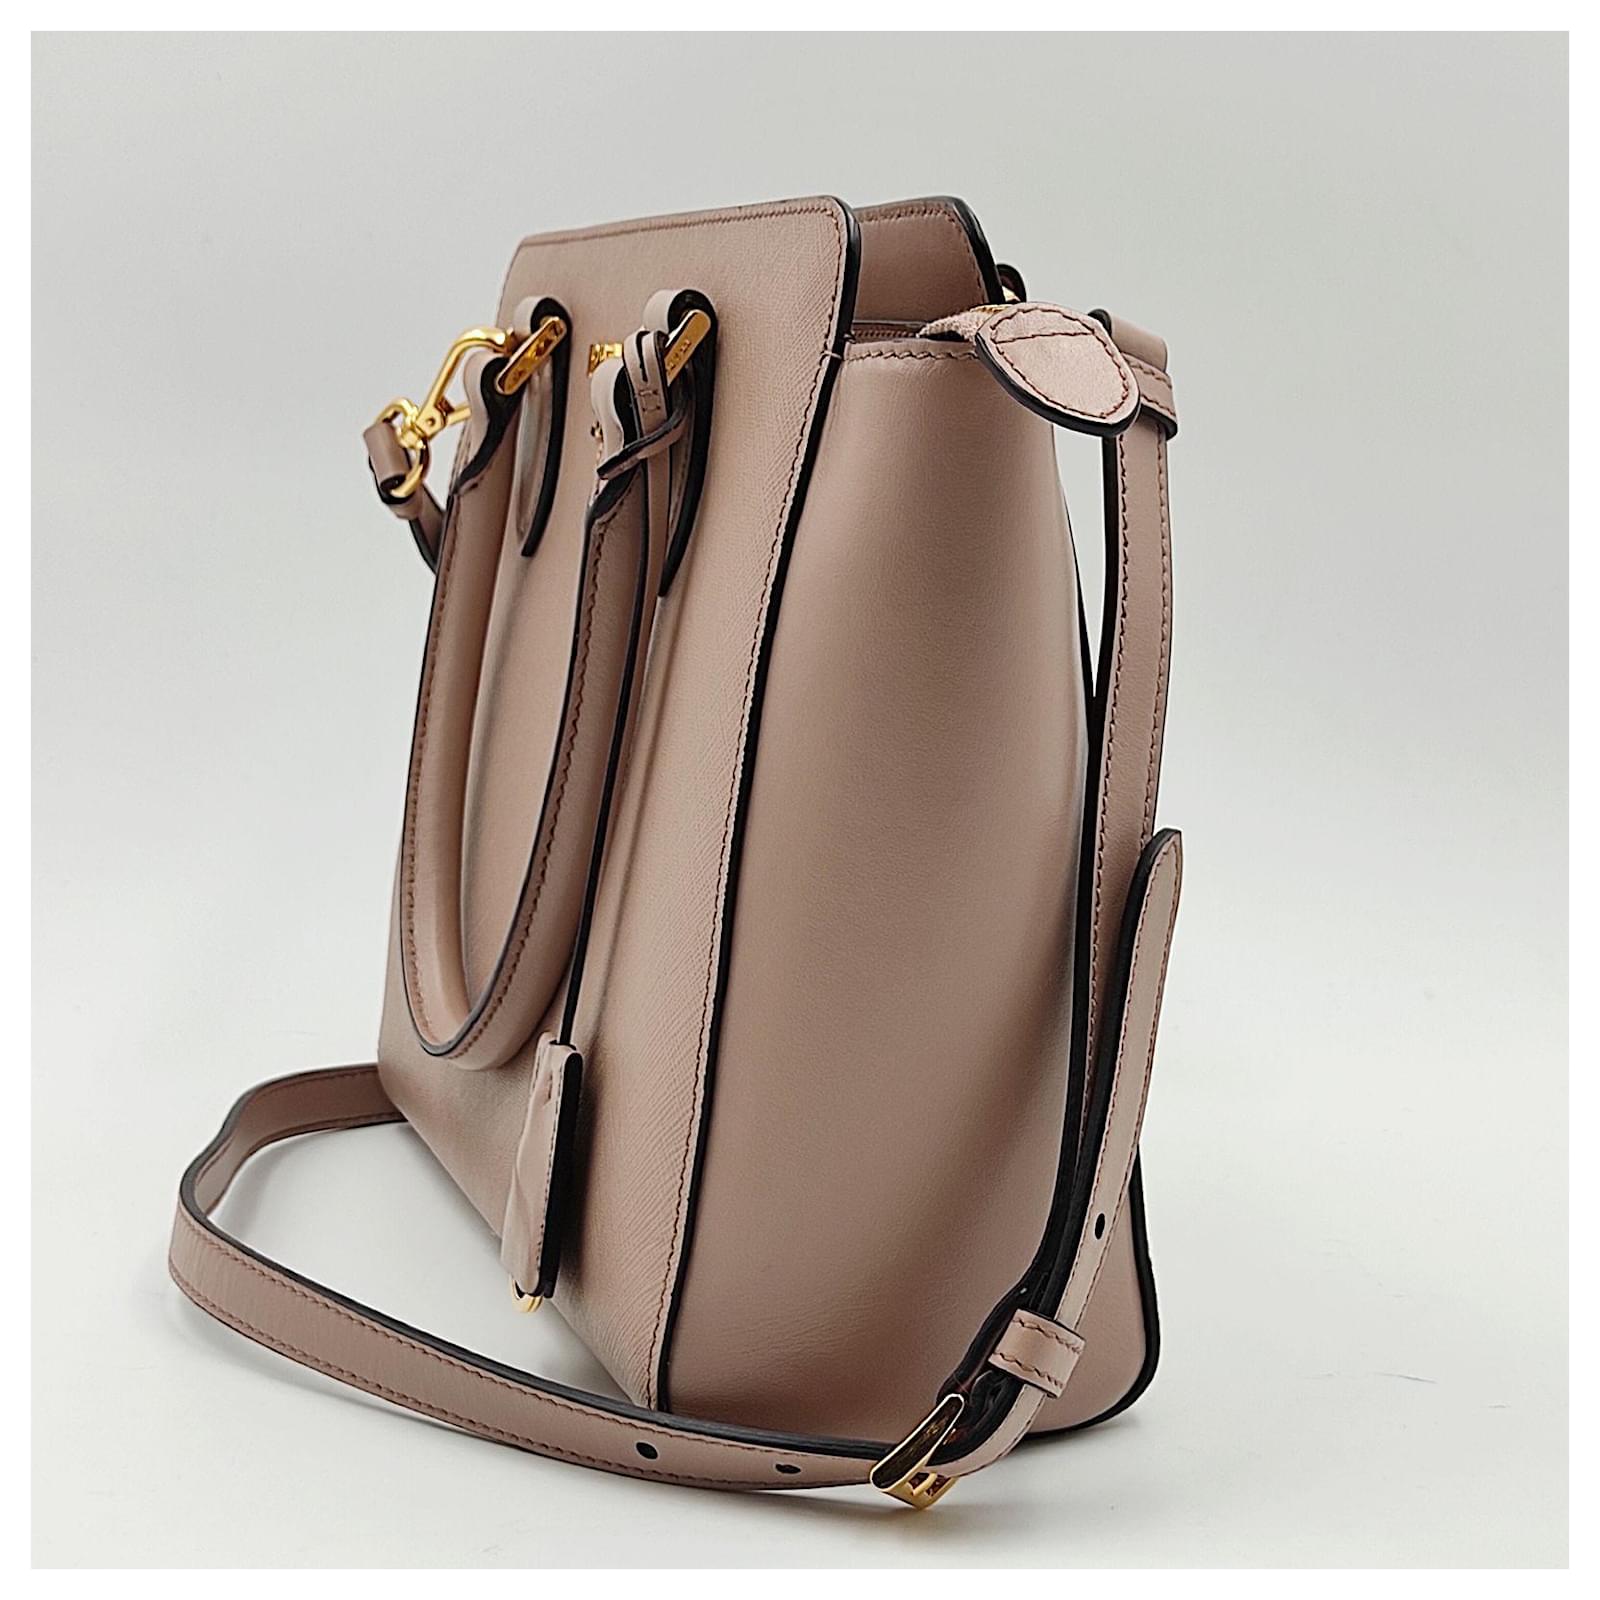 Prada - Small Saffiano Leather Double Bag Tote - Powder Pink